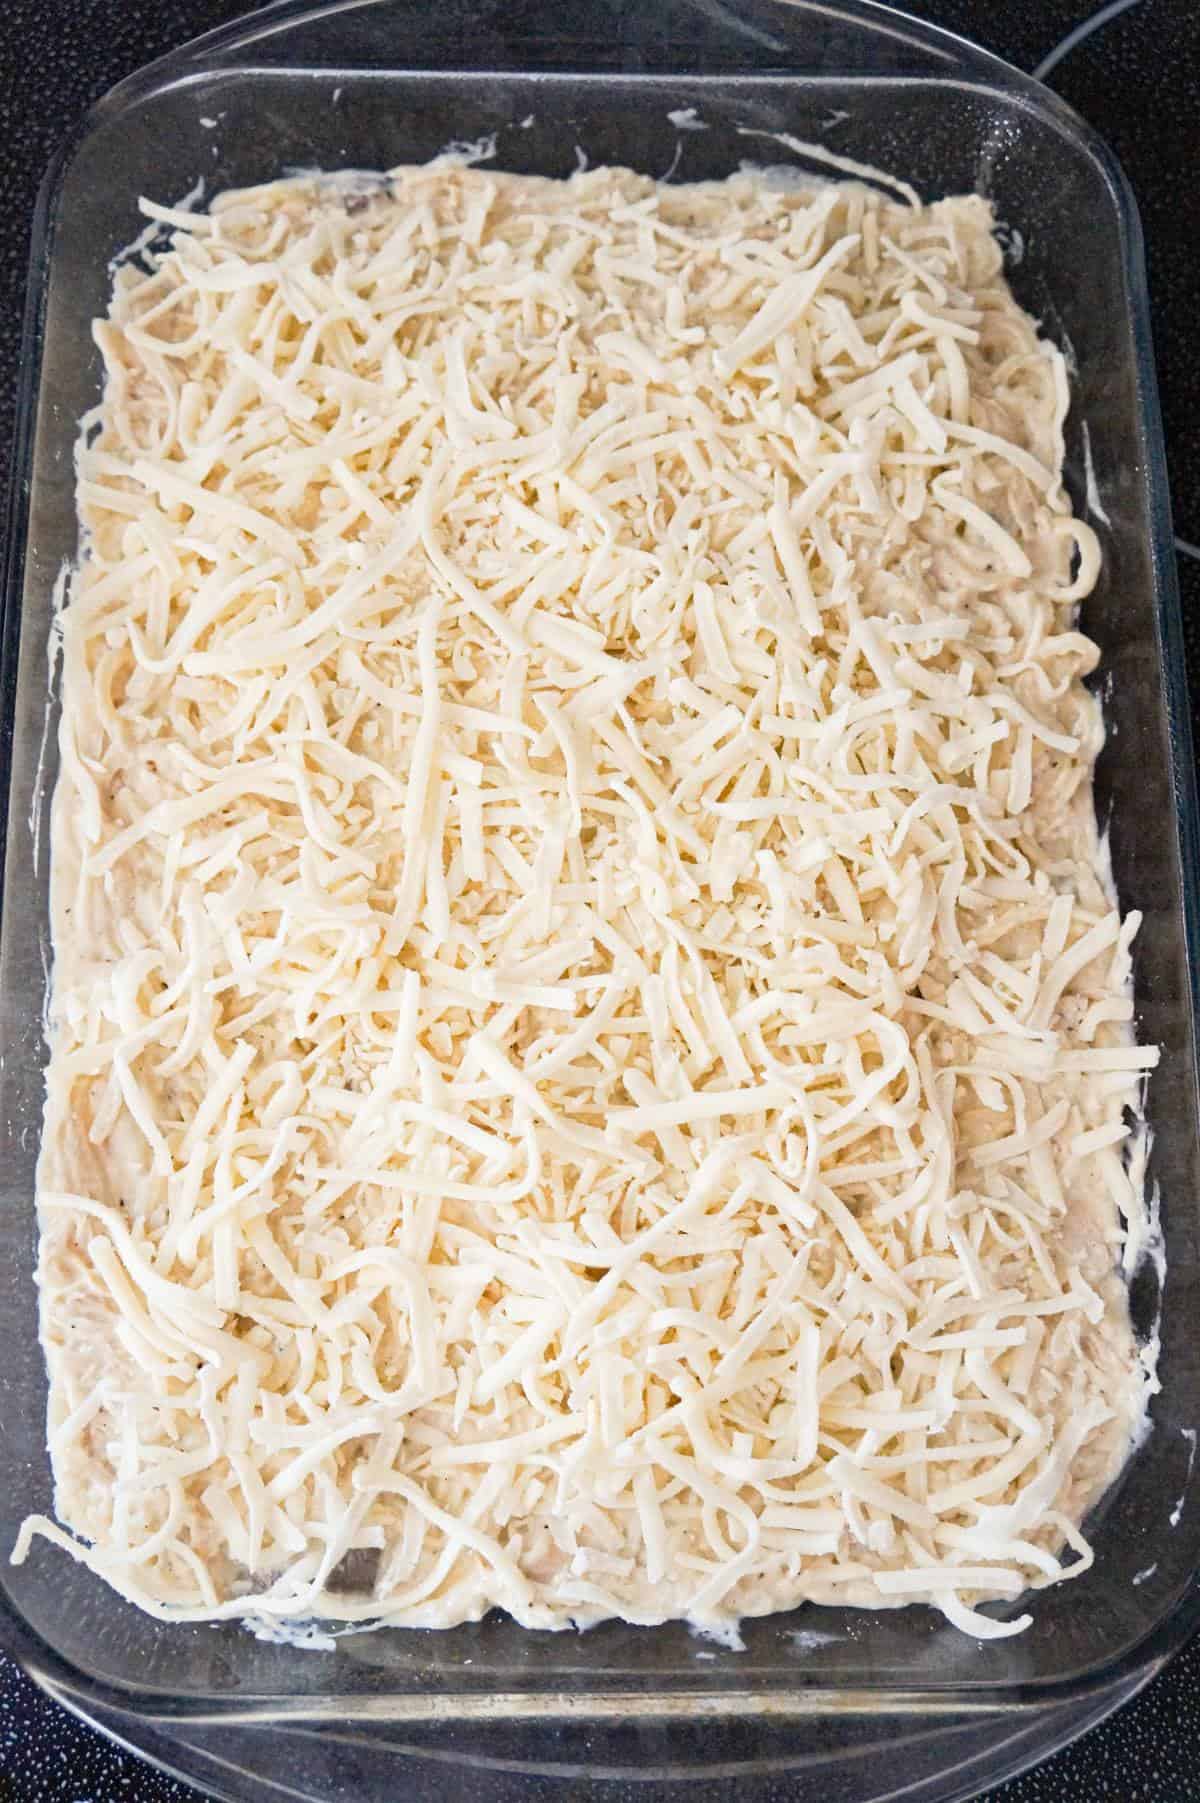 shredded mozzarella on top of chicken spaghetti before baking